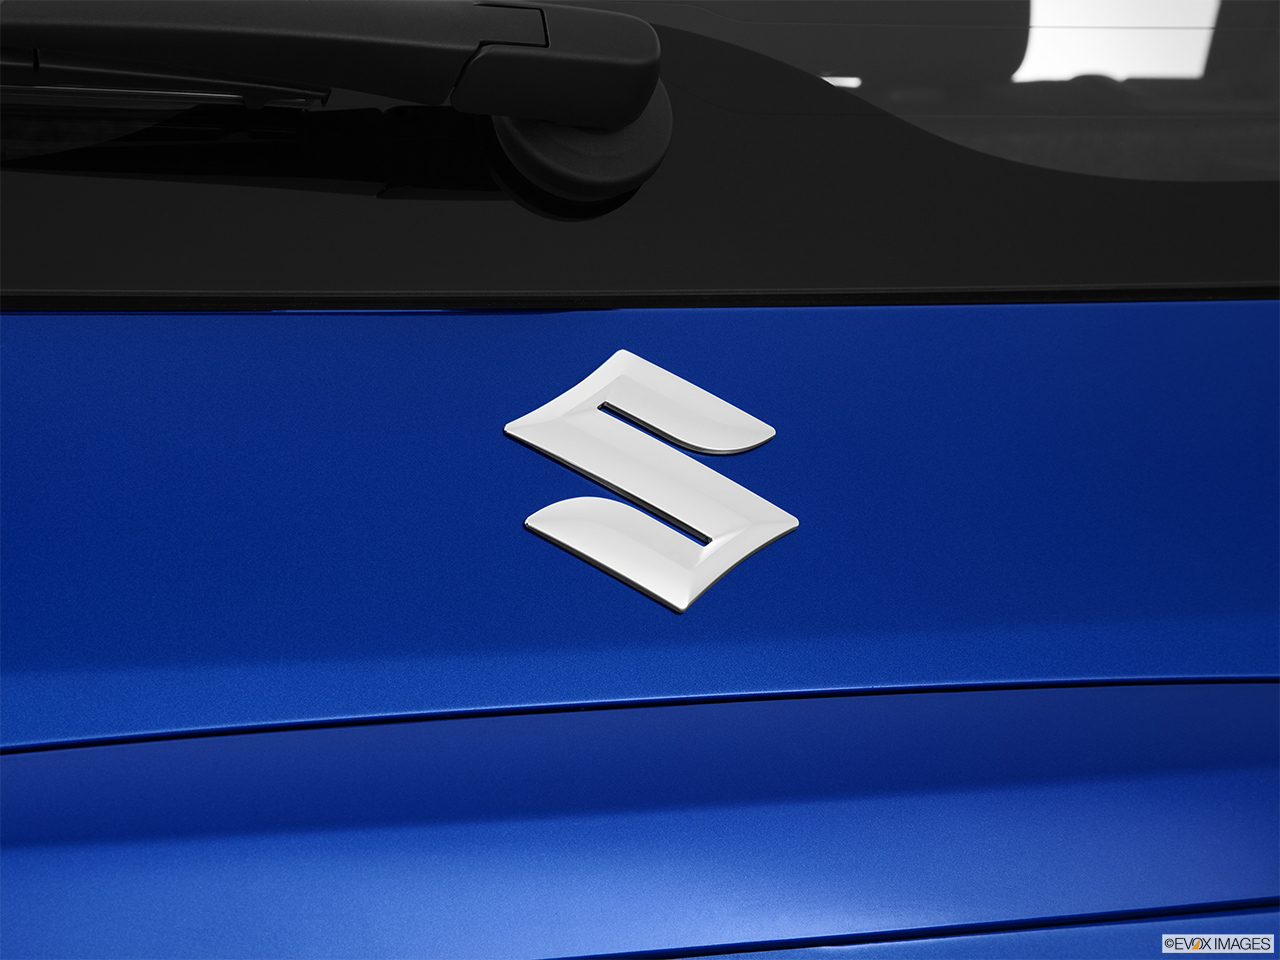 2013 Suzuki SX4 AWD Crossover Premium AT AWD Rear manufacture badge/emblem 